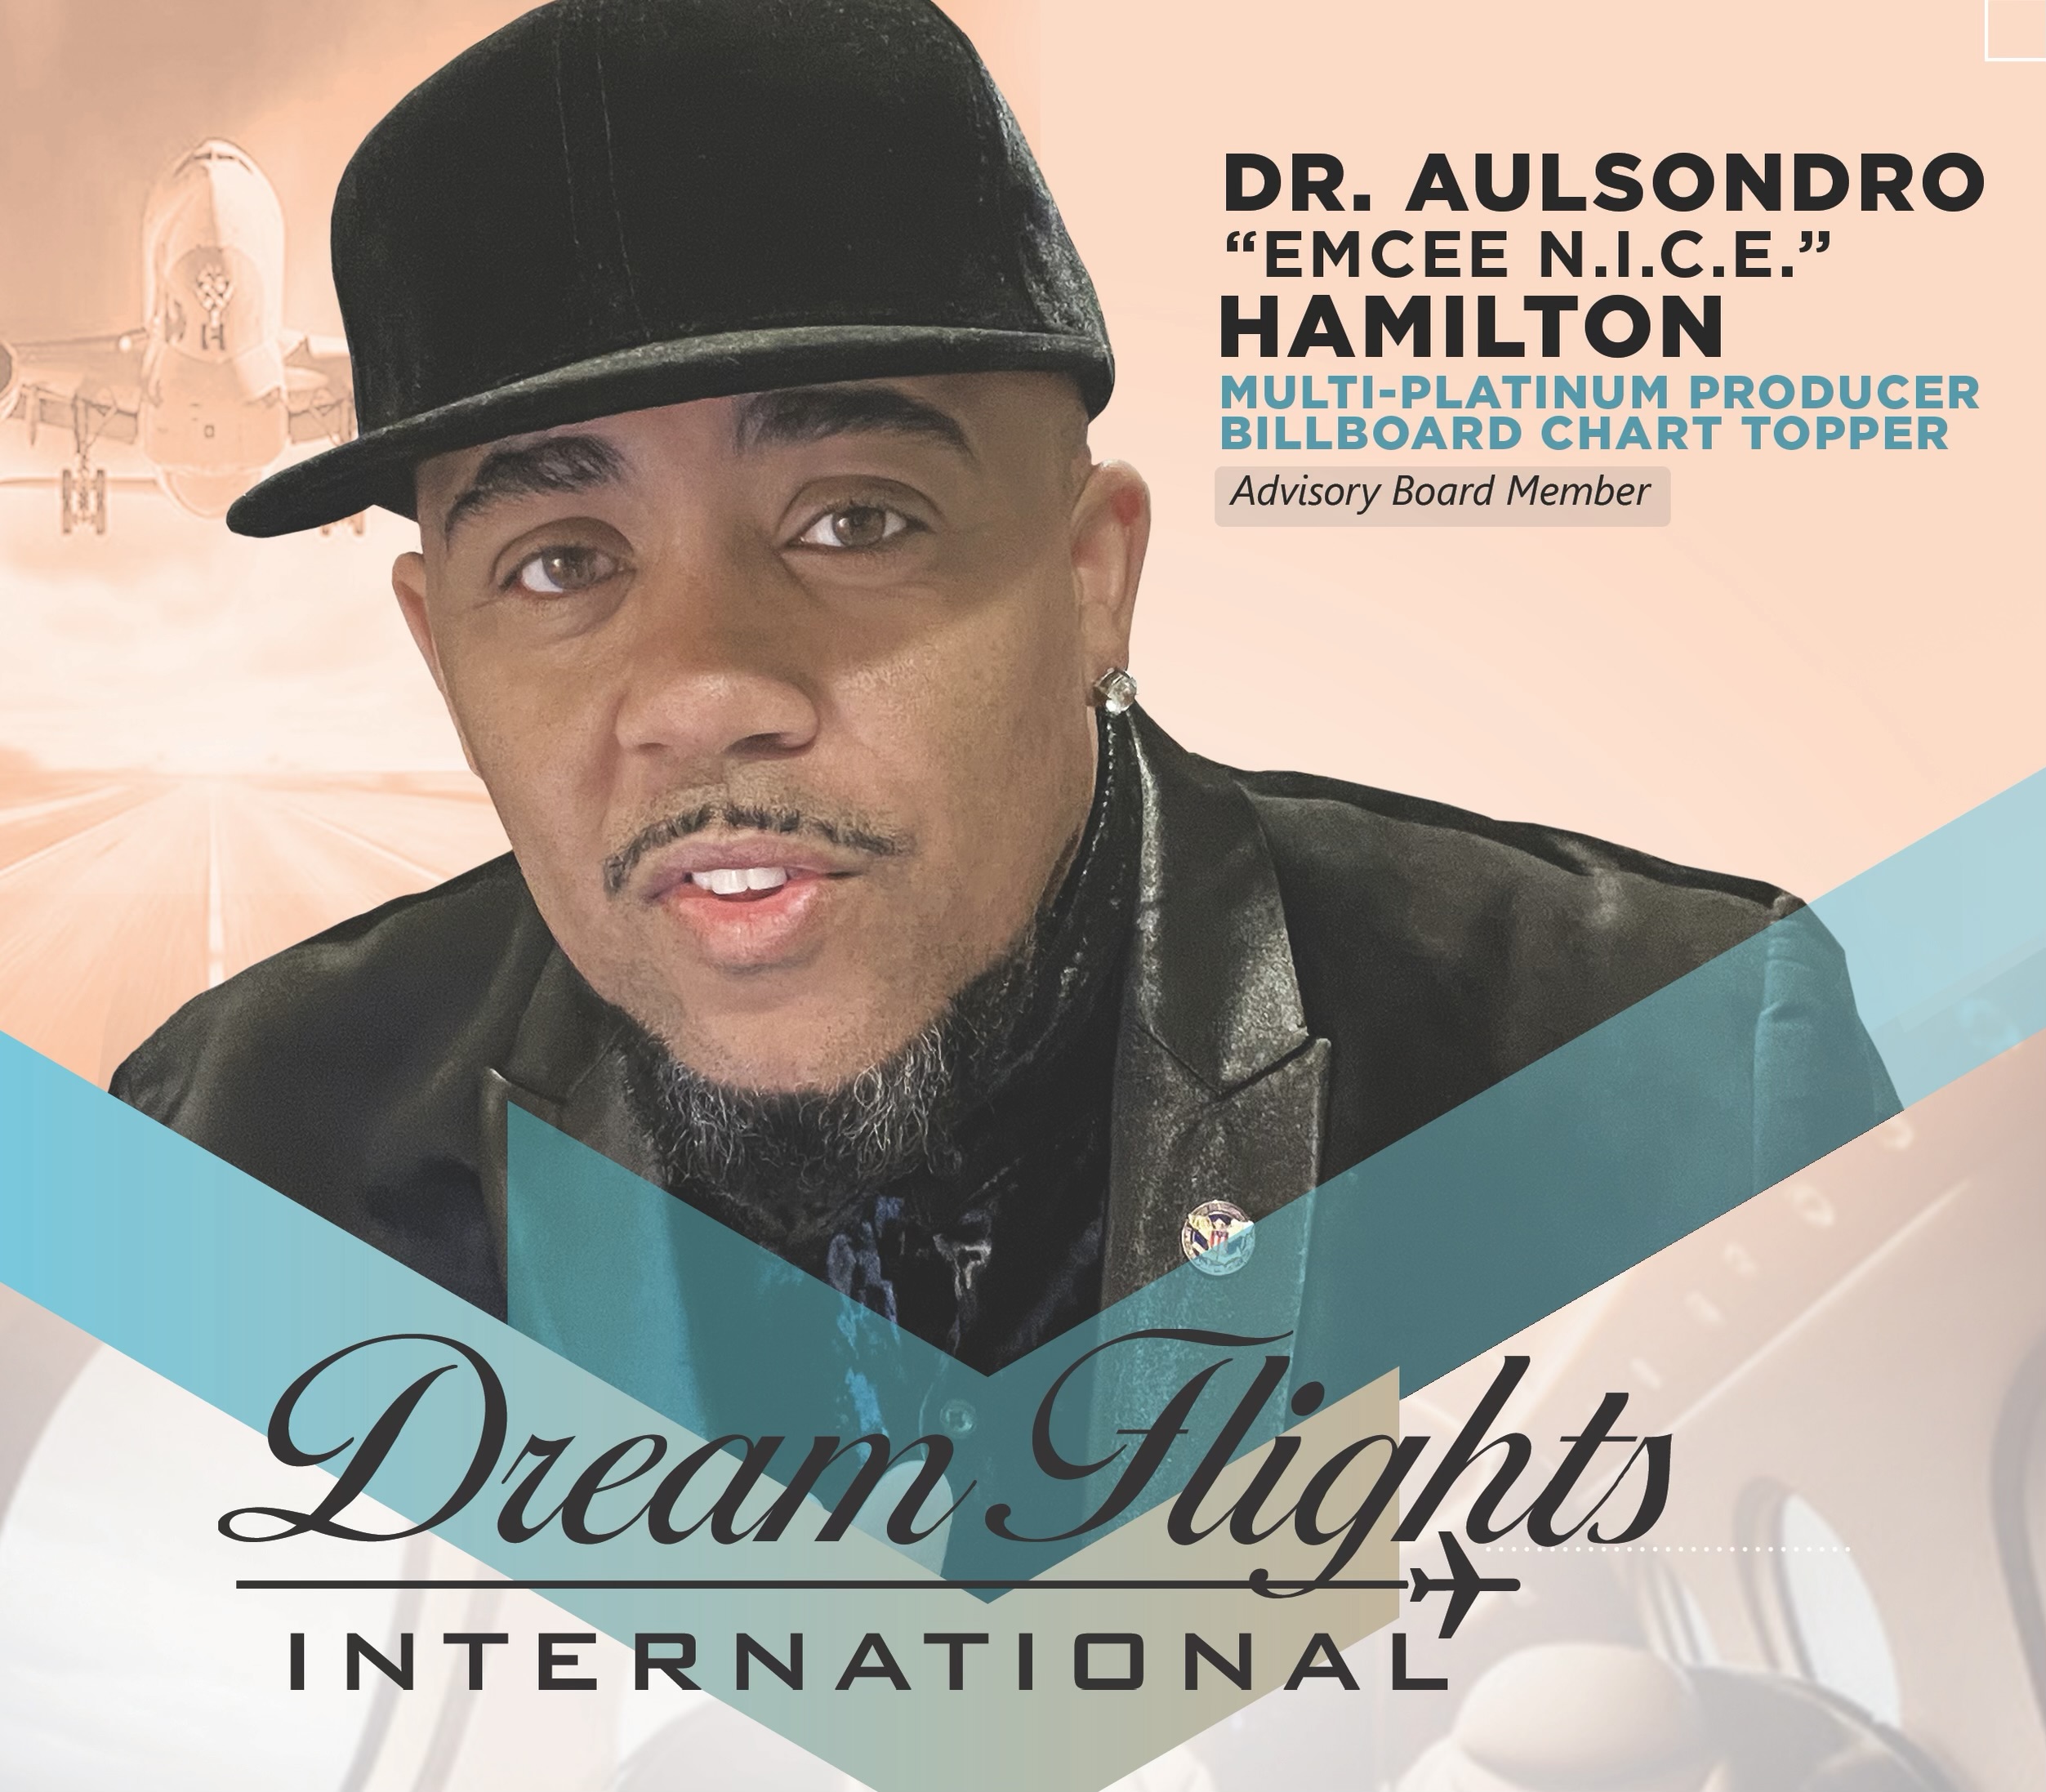 Dream Flights International Proudly Welcomes Dr. Aulsondro Emcee N.I.C.E. Hamilton to its Advisory Board